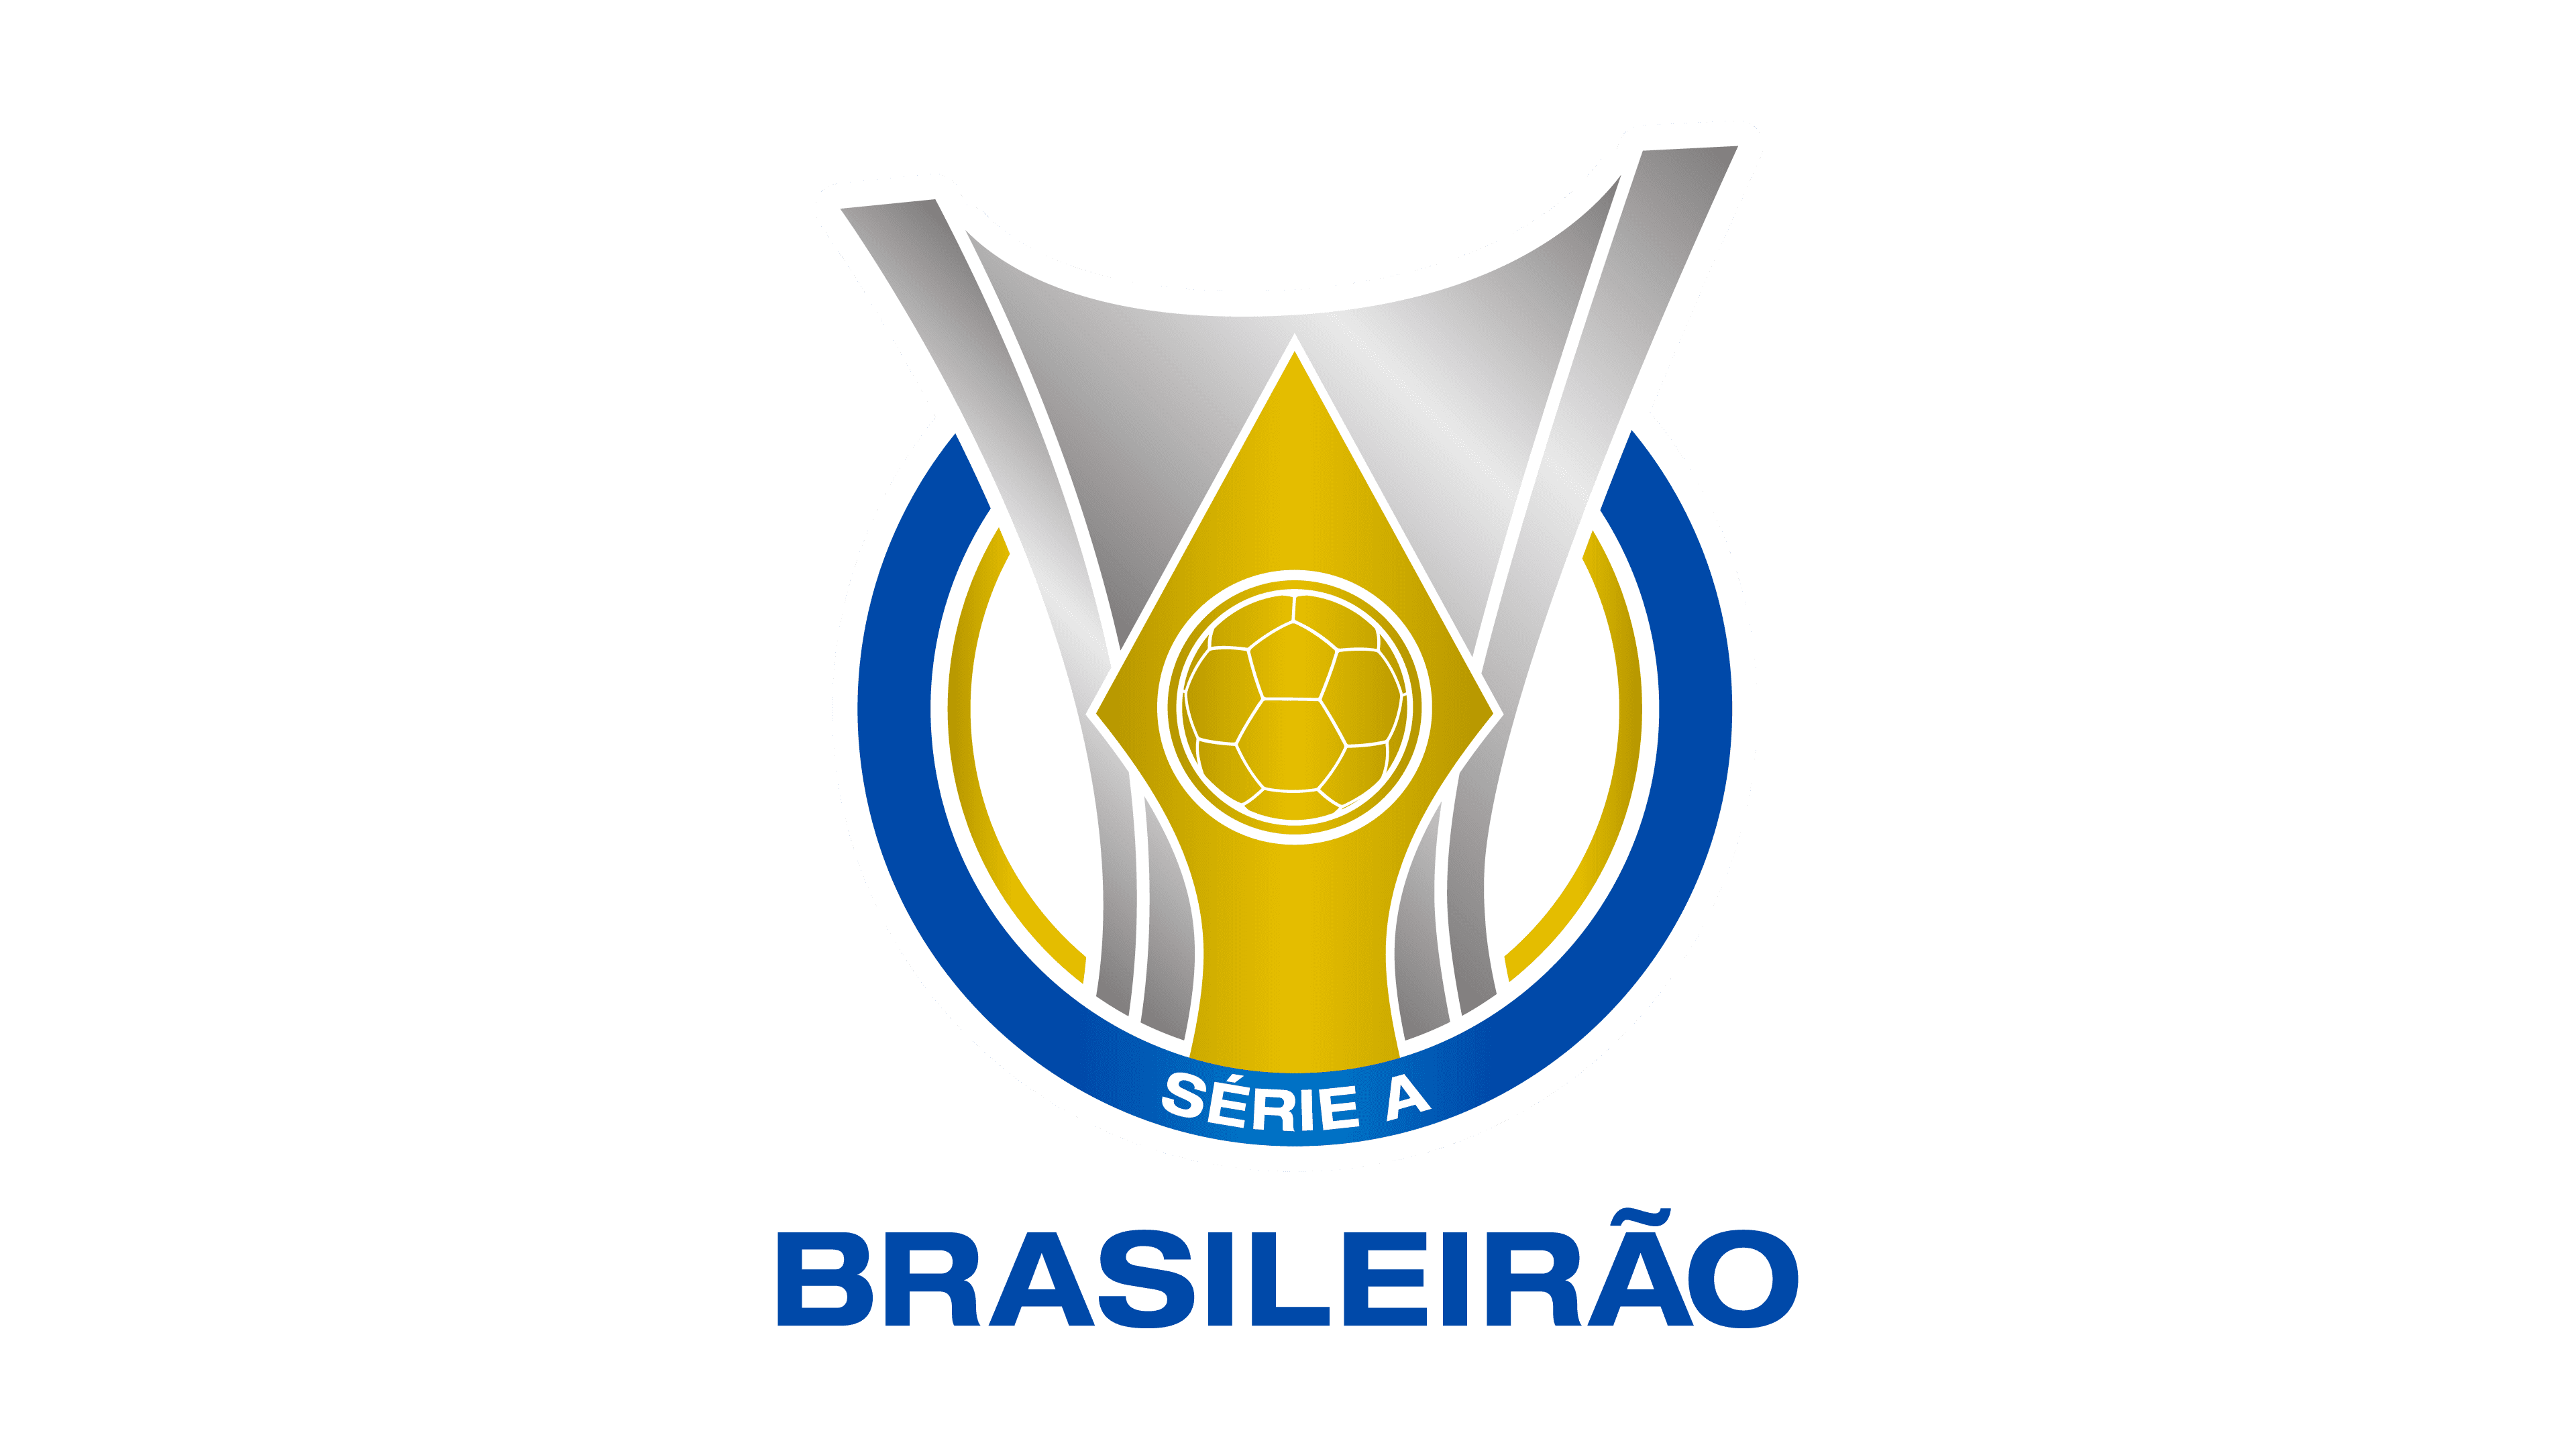 Campeonato Brasileiro Série A logo and symbol, meaning, history, PNG, brand